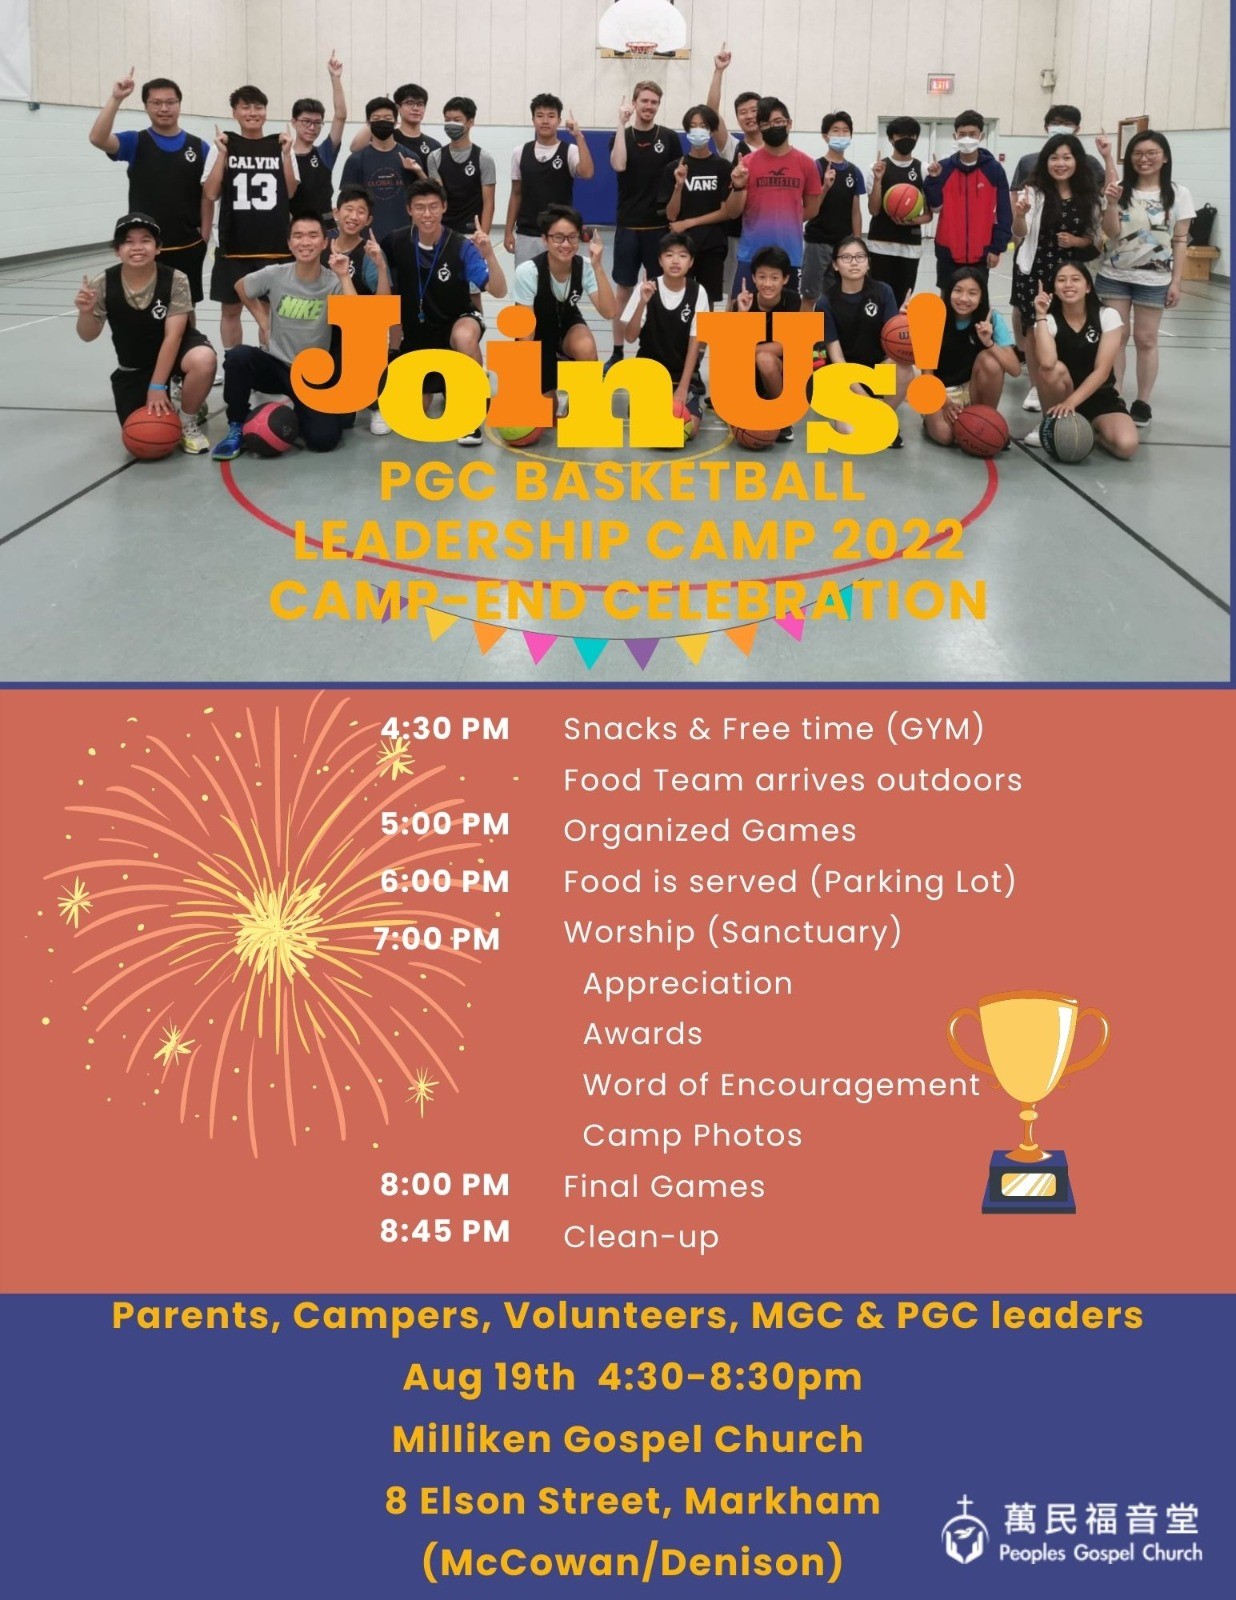 Basketball Summercamp camp-end celebration